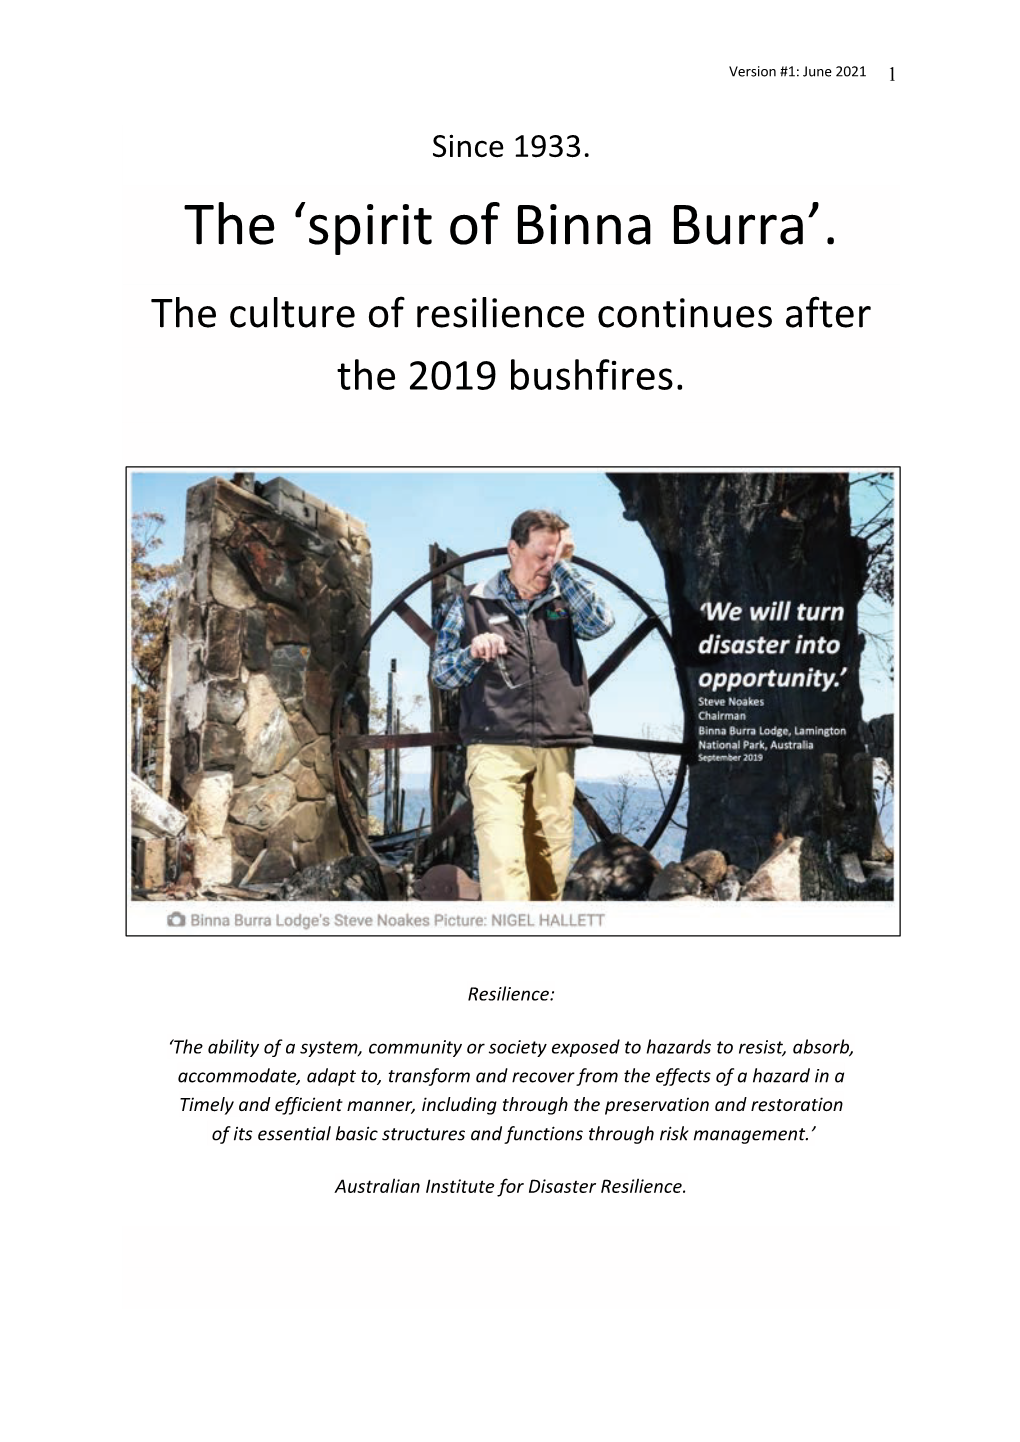 The 'Spirit of Binna Burra'